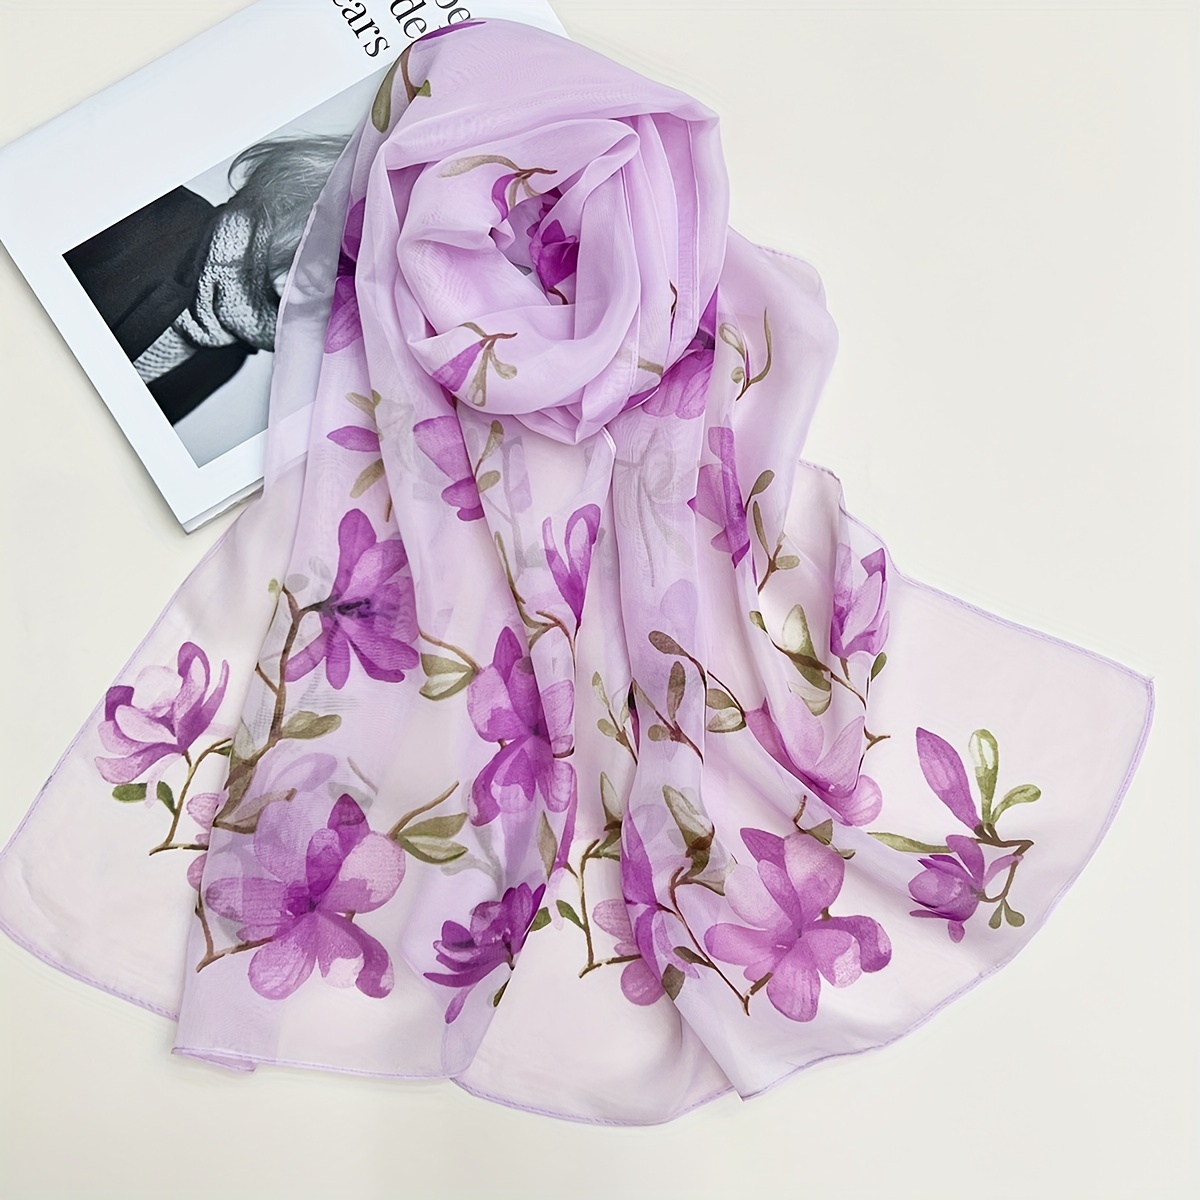 

Flower Printed Chiffon Scarf Thin Breathable Soft Skin Friendly Shawl Boho Style Sunscreen Travel Scarf For Women